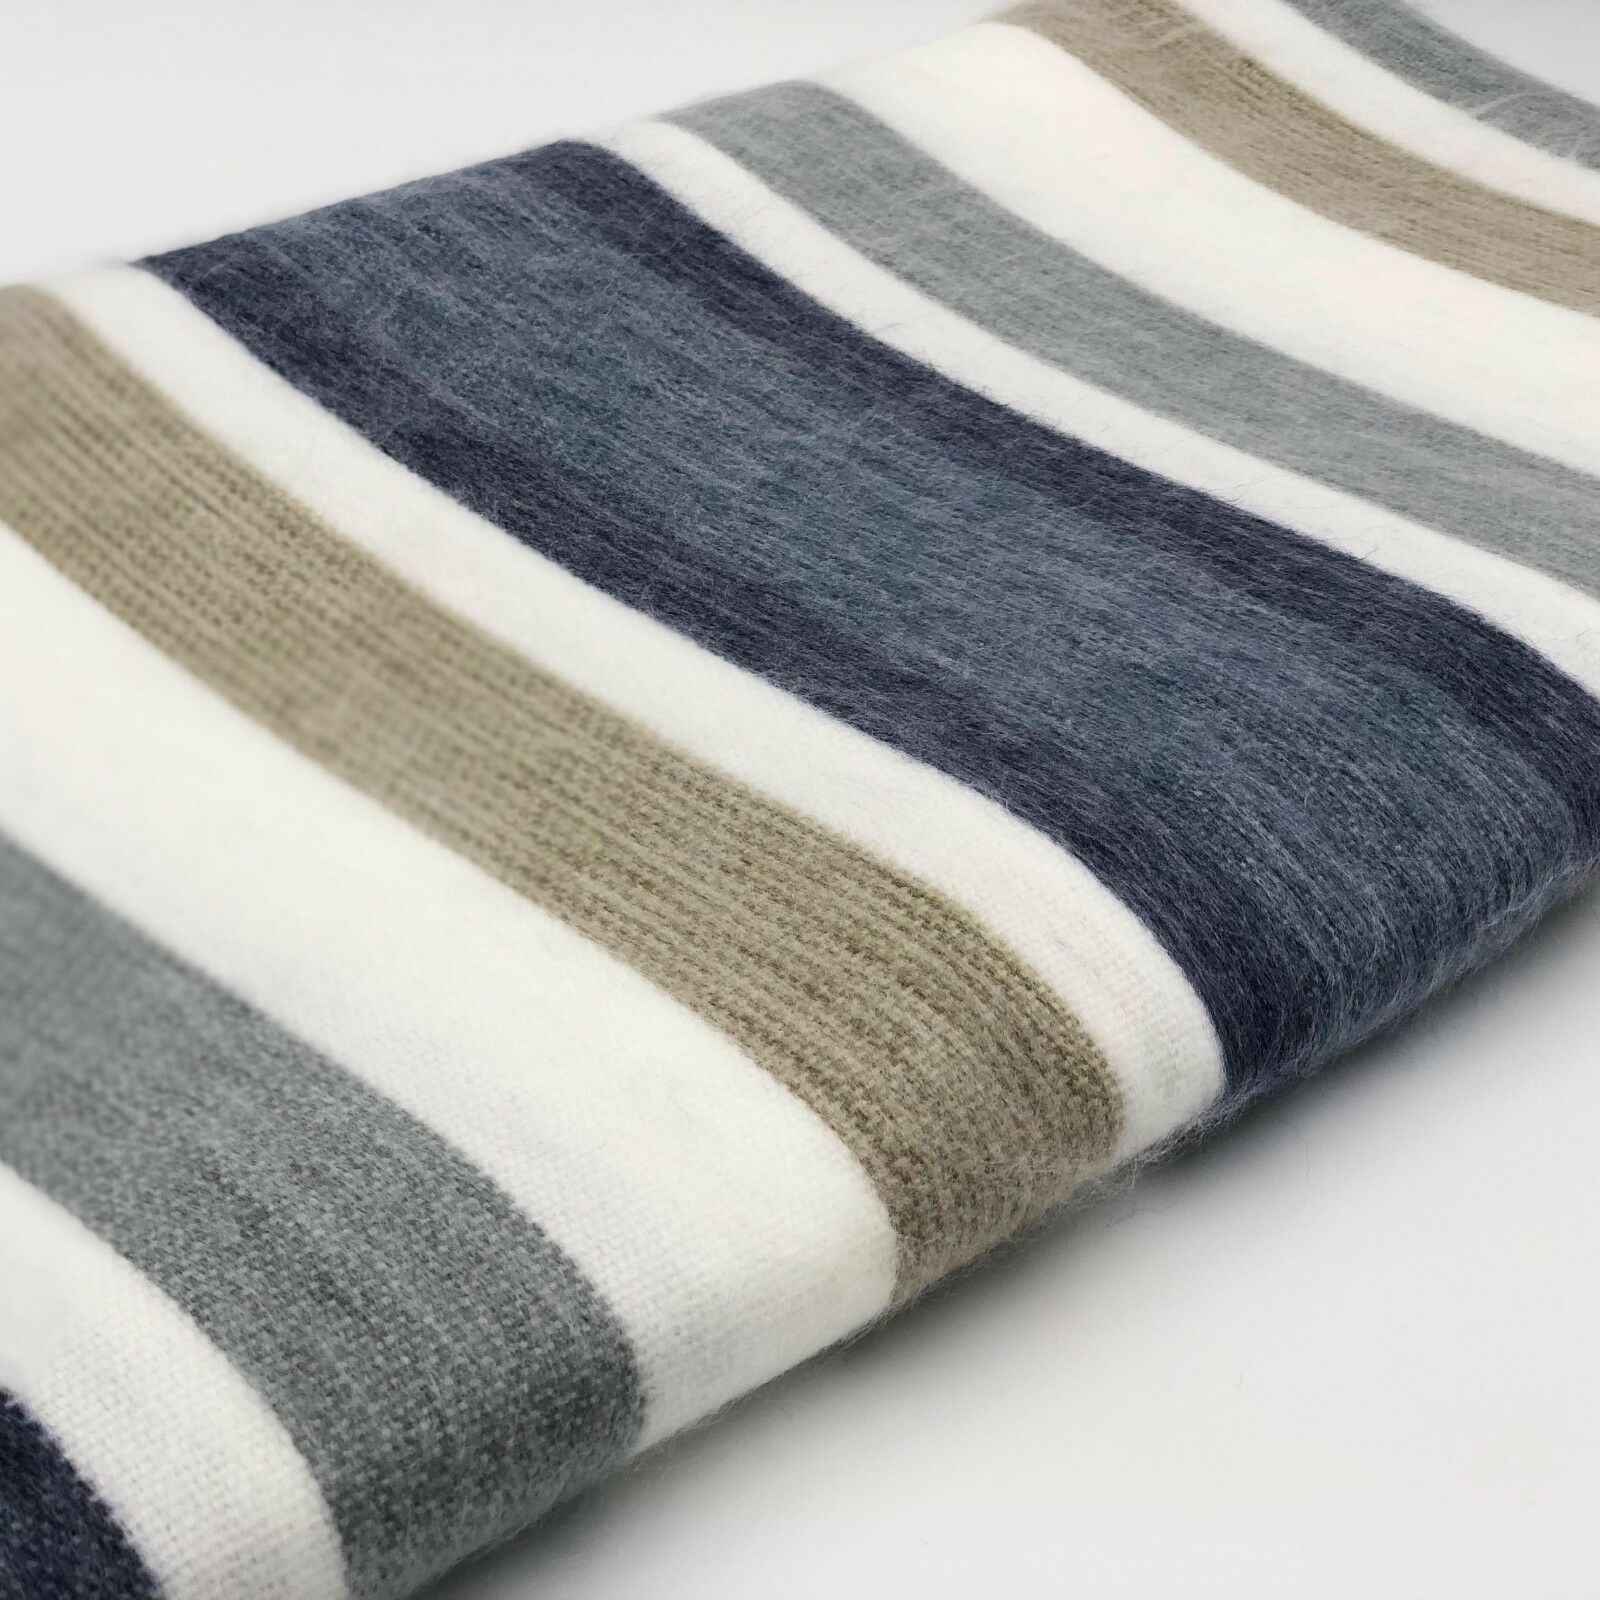 Pilishurco - Baby Alpaca Wool Throw Blanket / Sofa Cover - Queen 90" x 65" - striped pattern